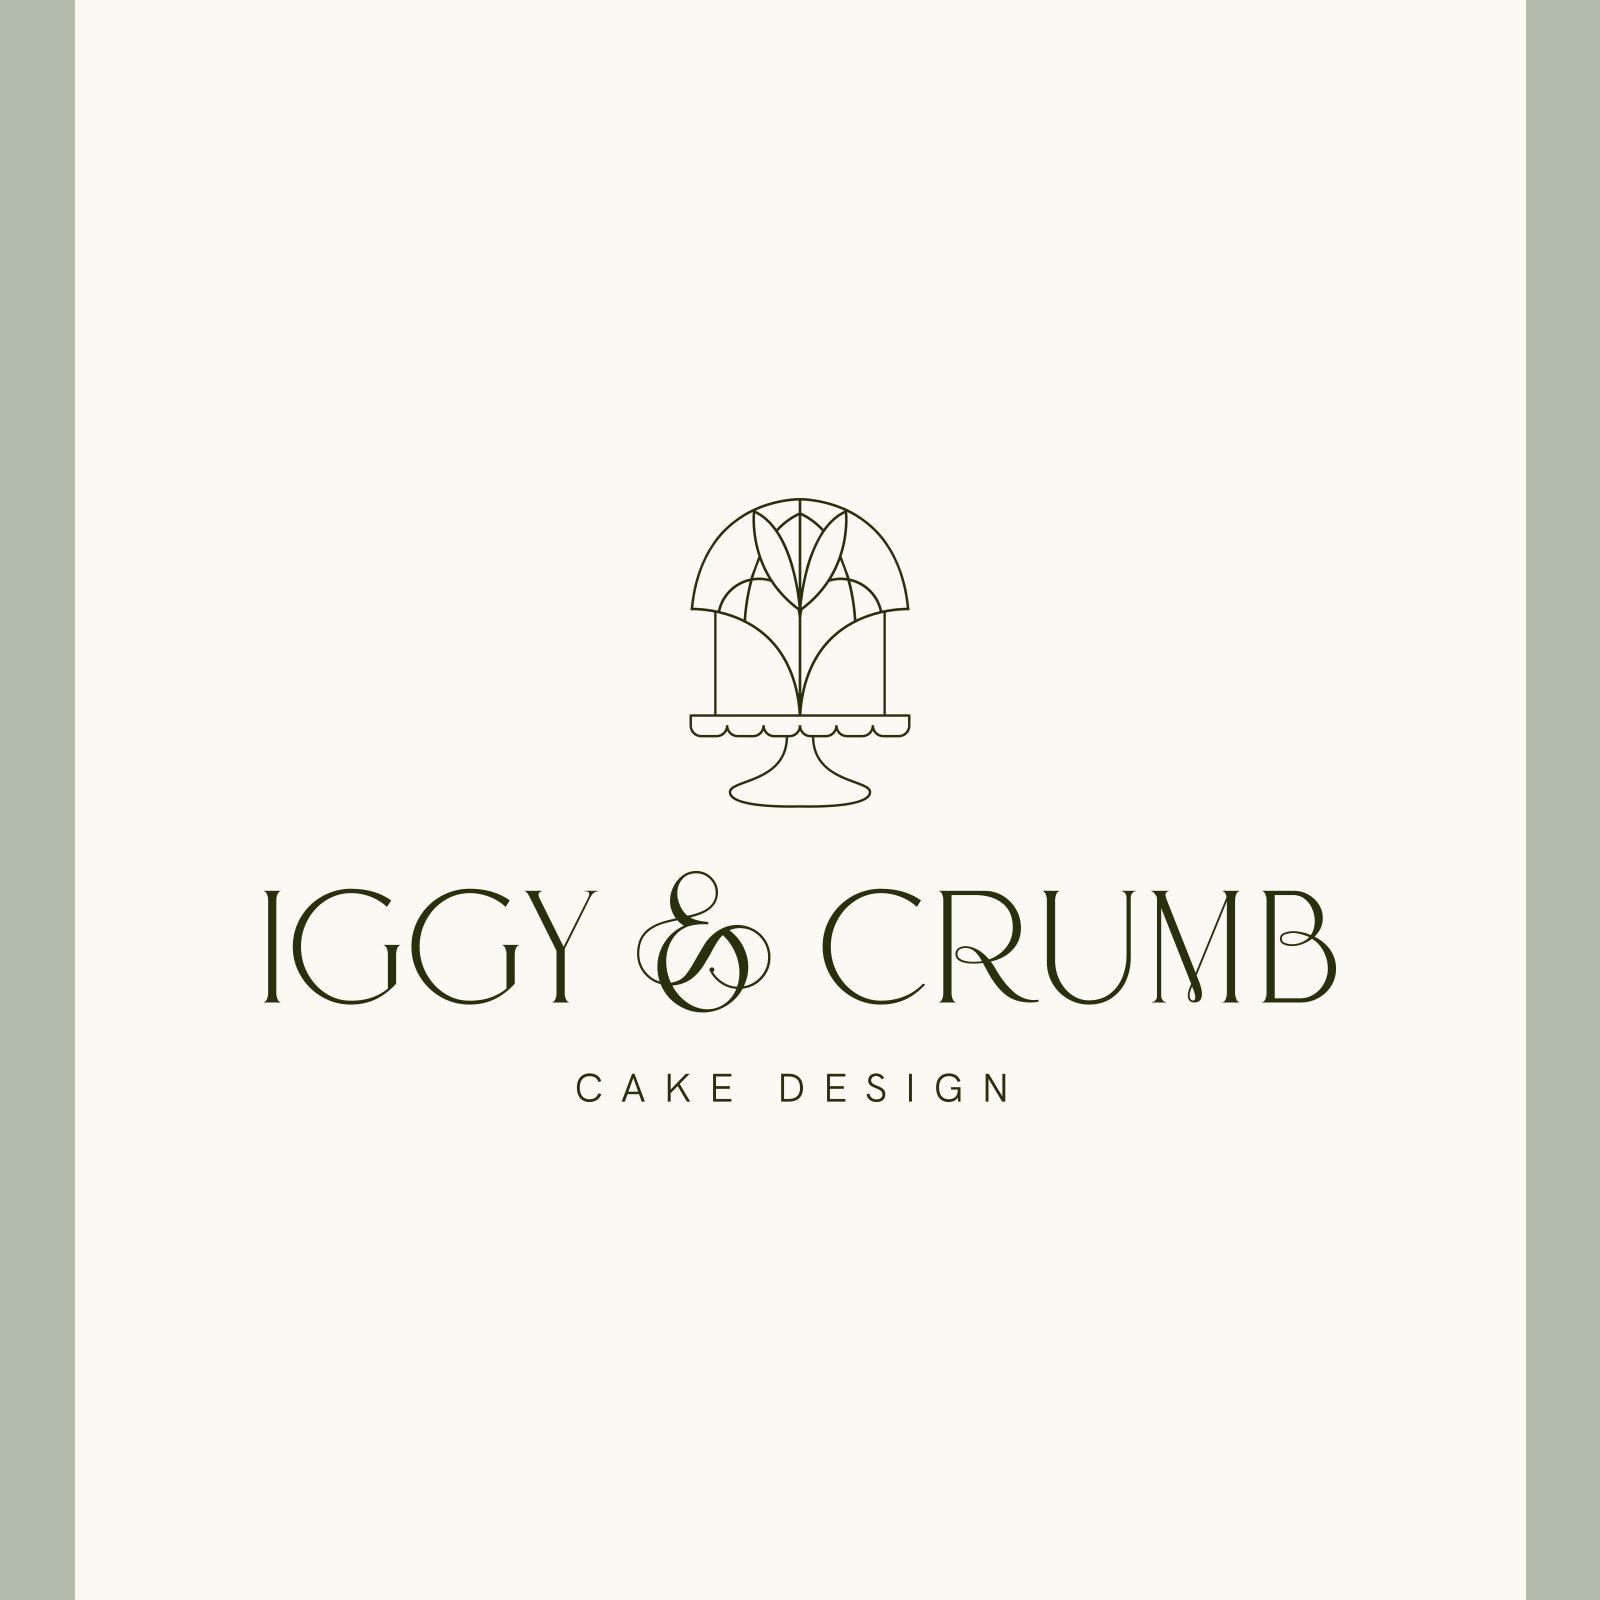 Iggy & Crumb Cake Design branding by Leysa Flores Design